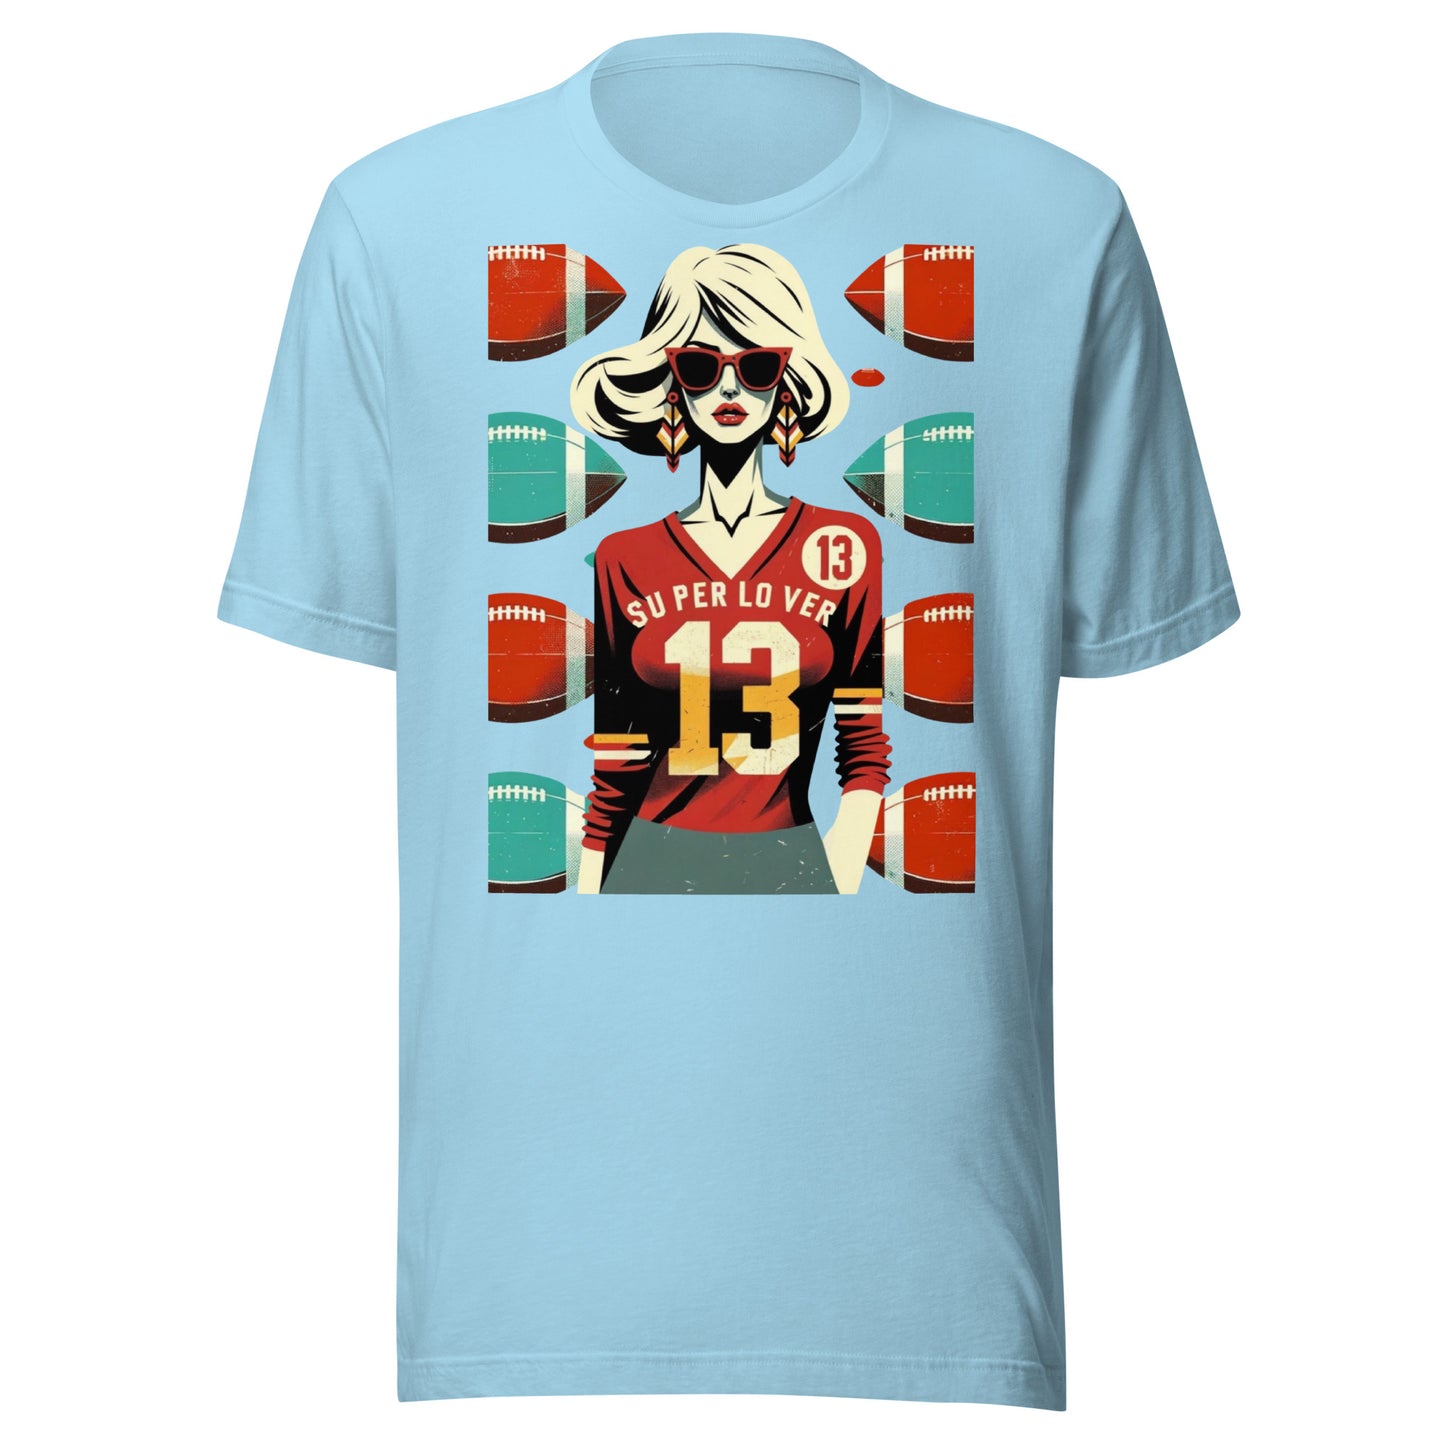 Super Football Lover Unisex t-shirt